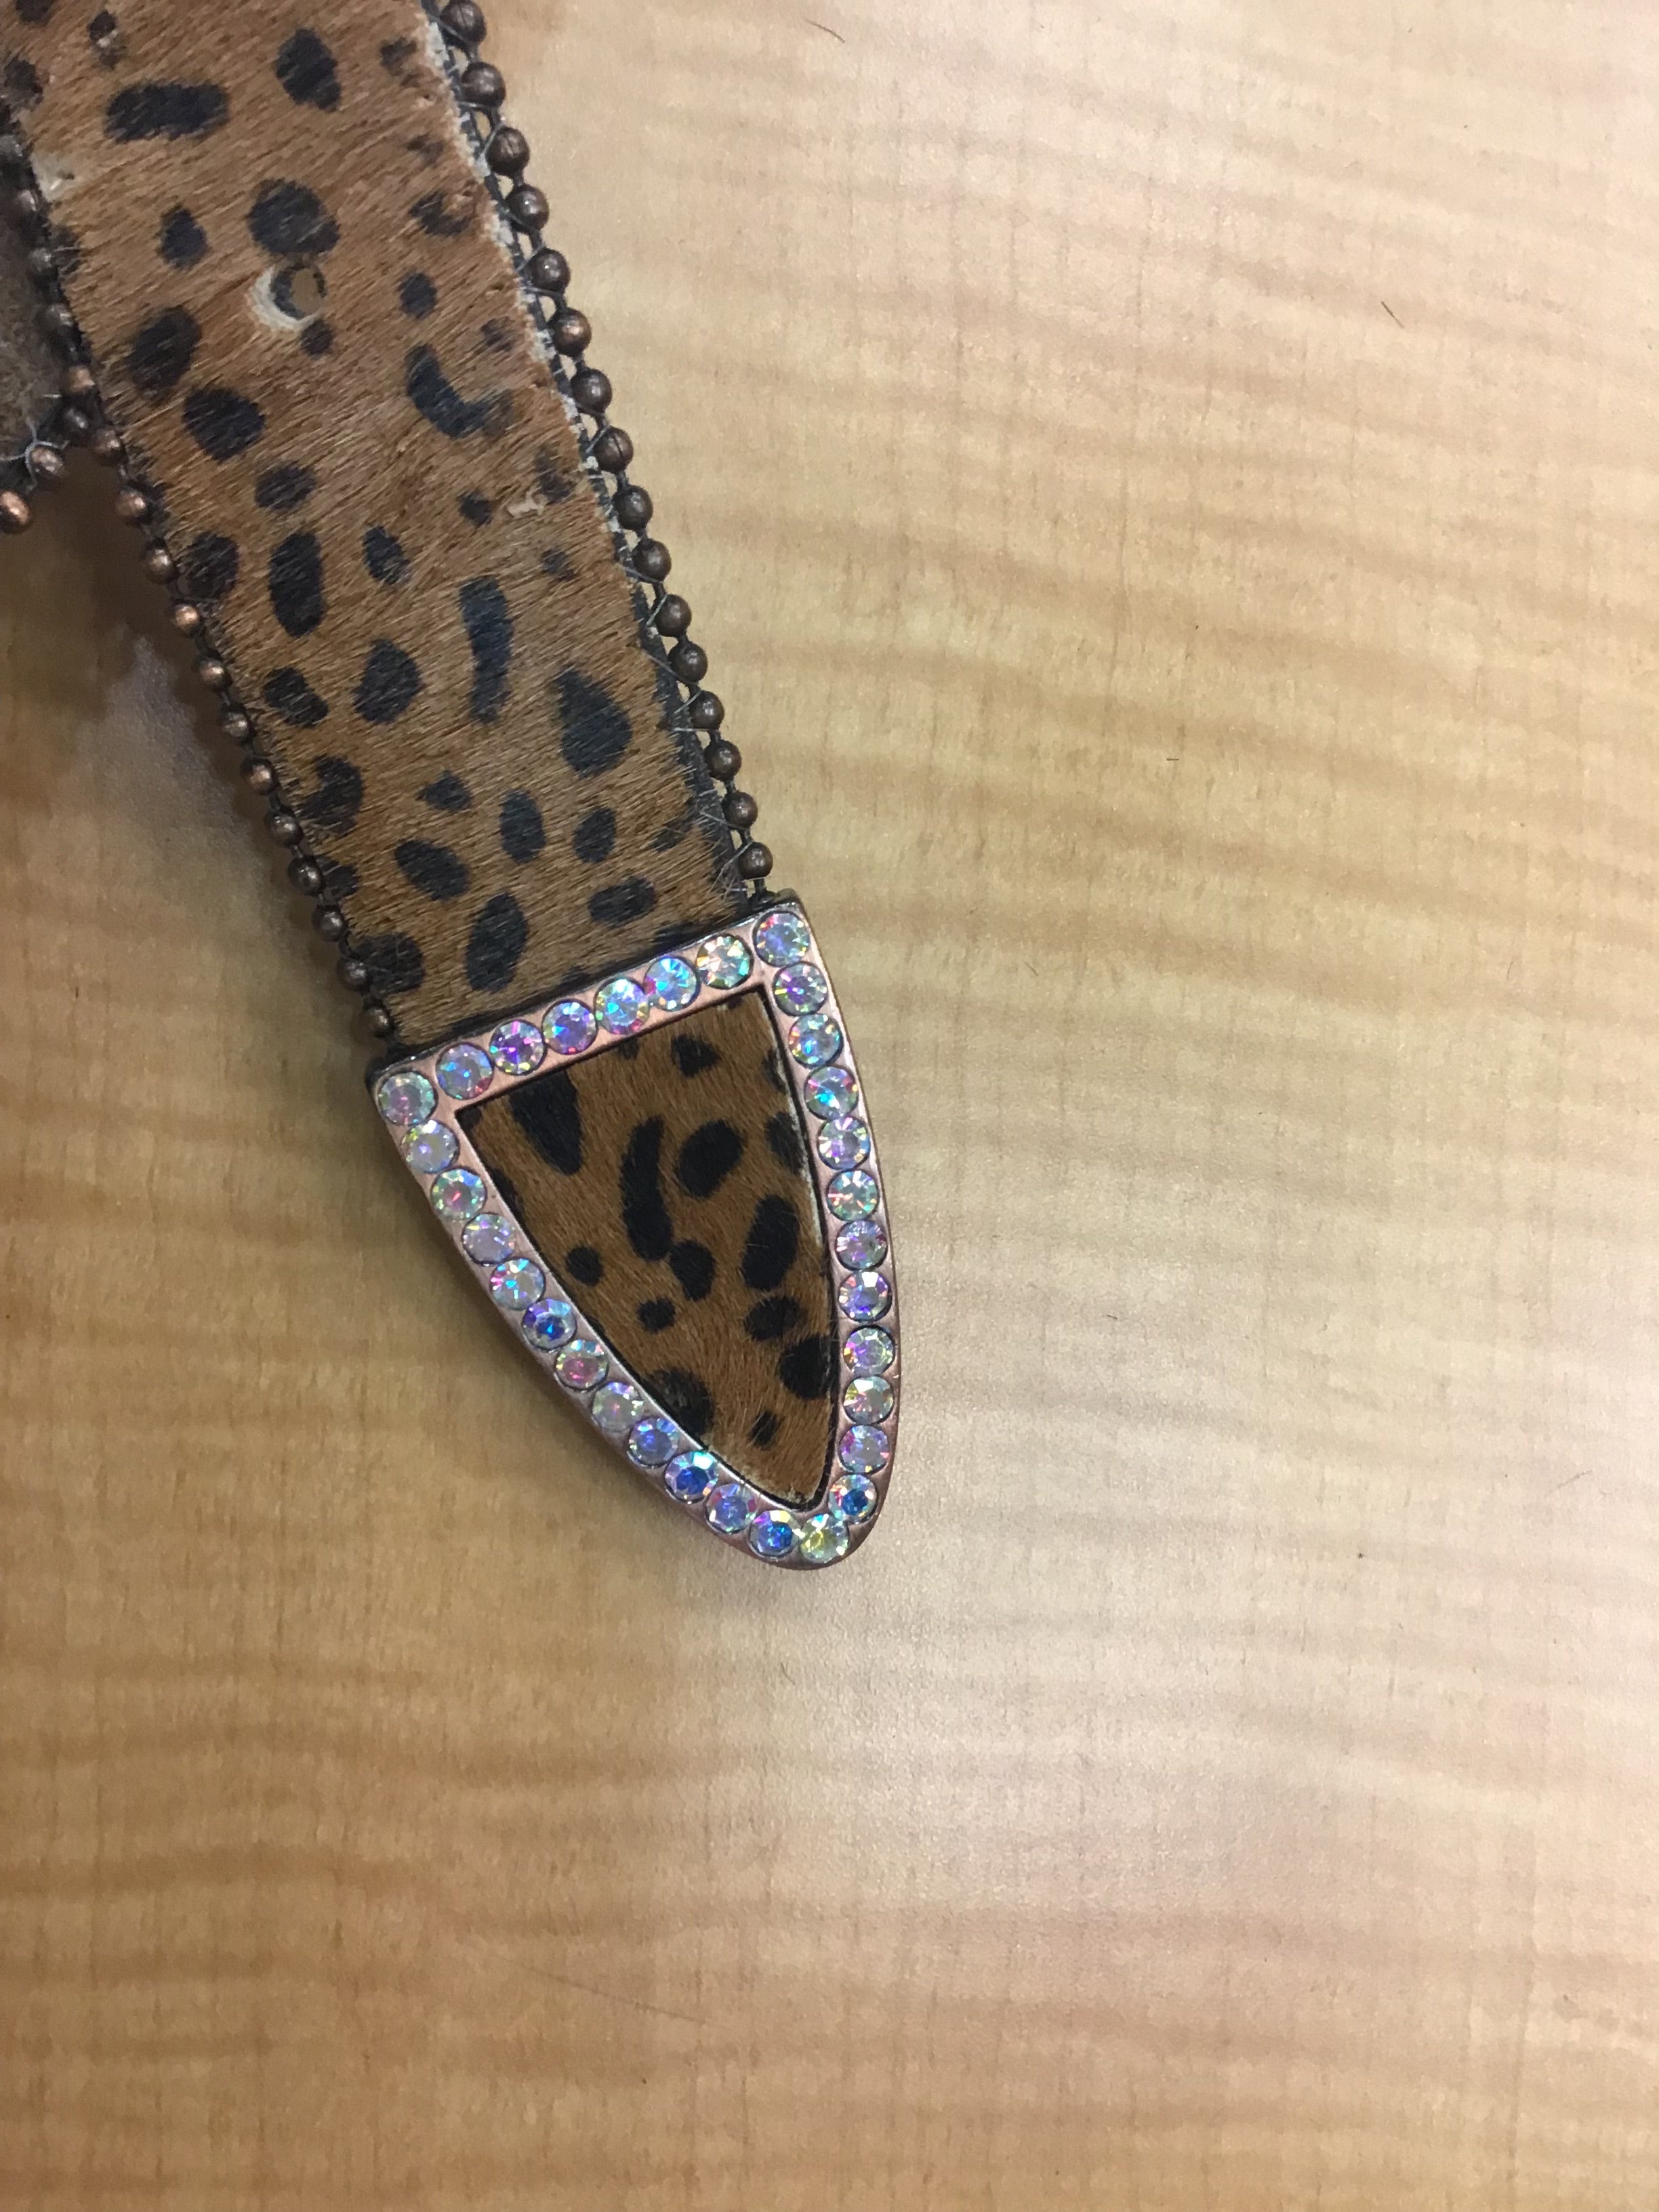 Cheetah Print Blingy Belt